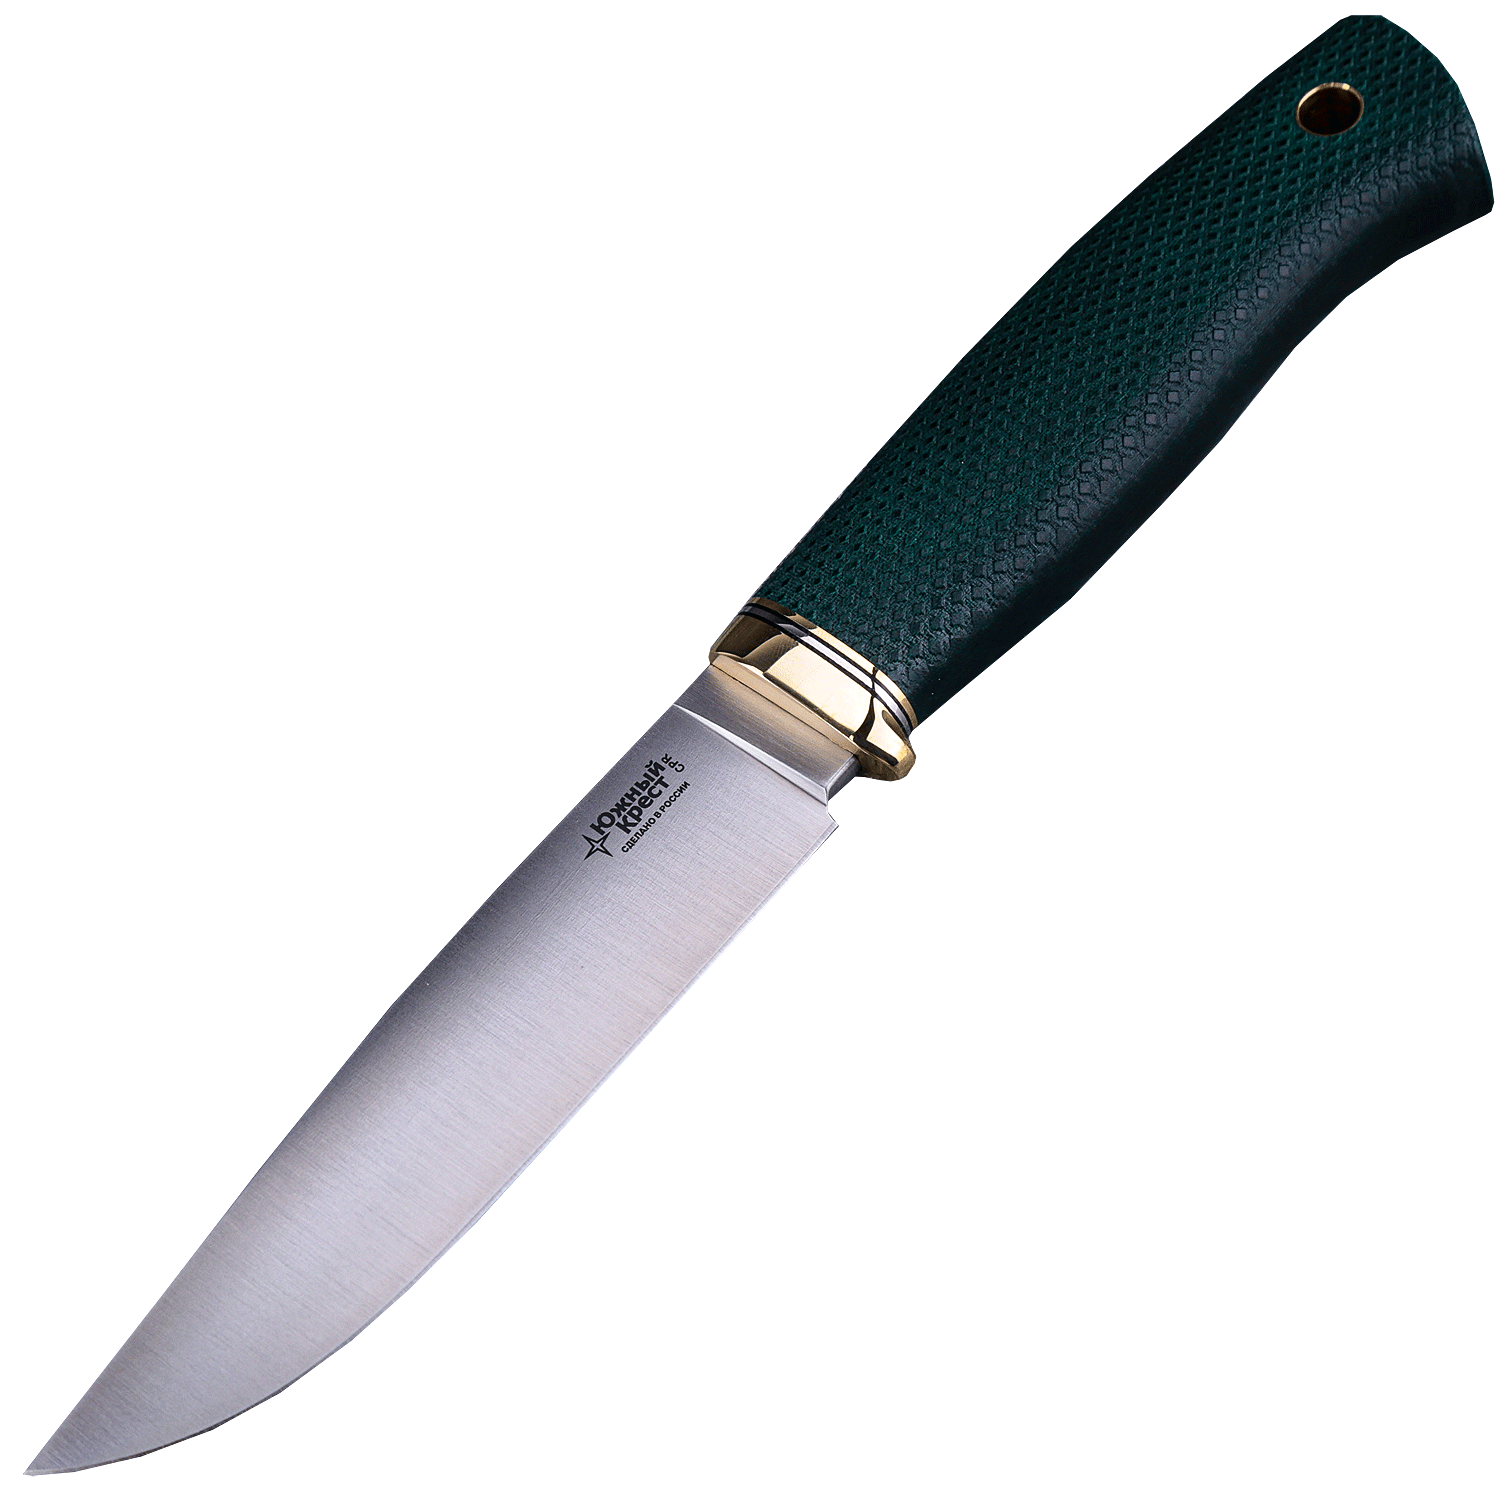 Нож универсальный Удобный Bohler N690, Южный Крест, граб